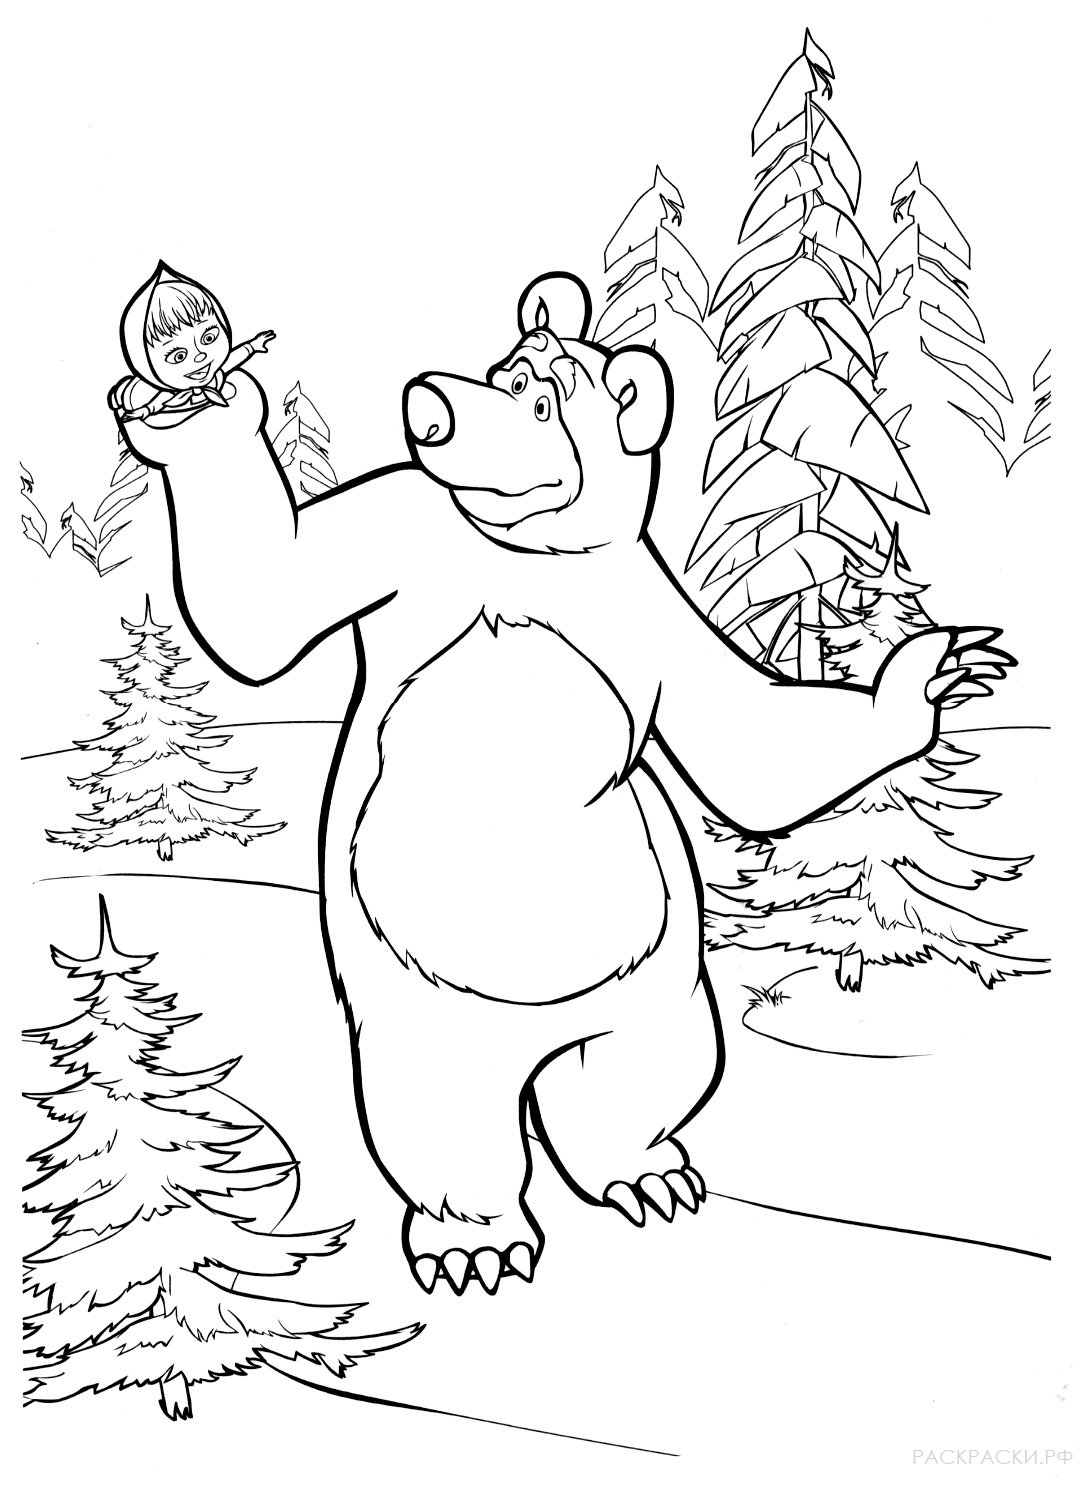 Раскраска Маша в лапах у Медведя в лесу